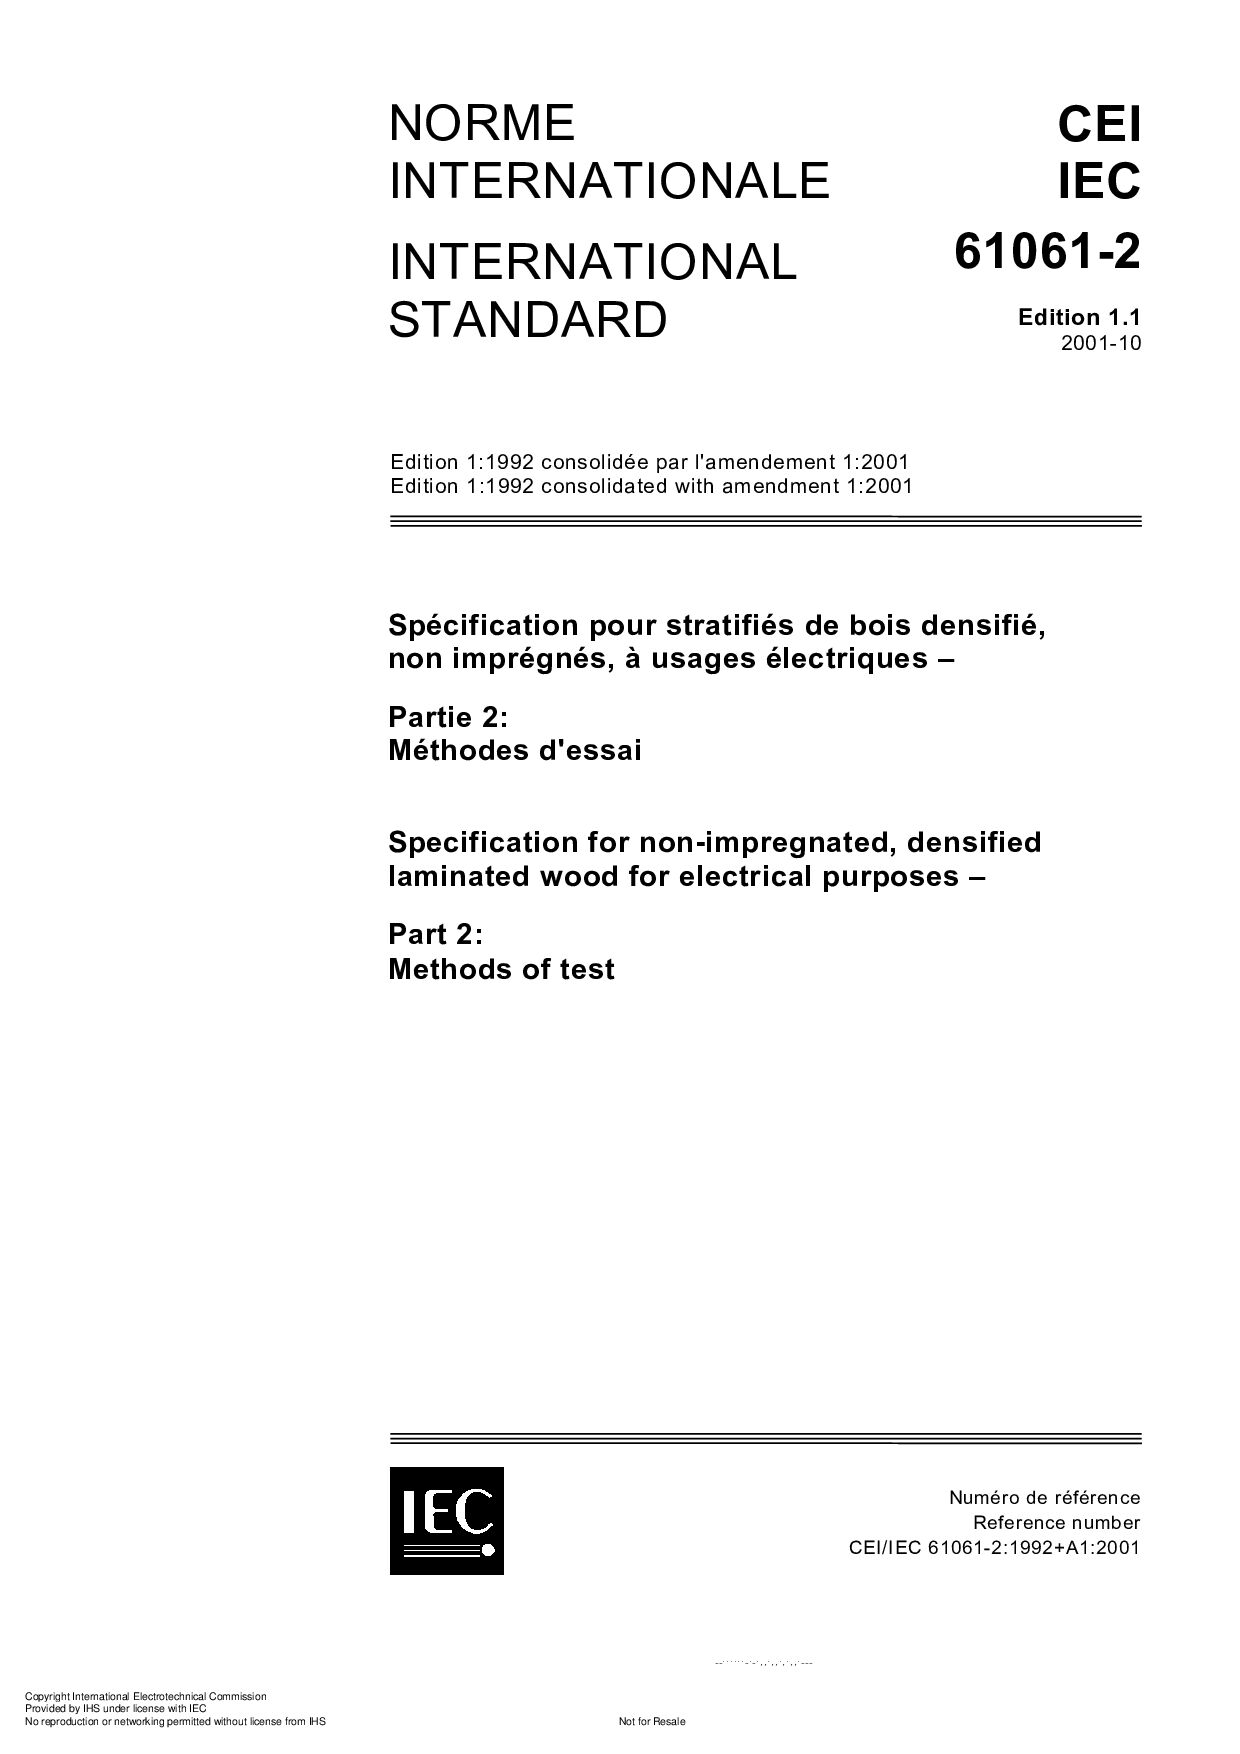 IEC 61061-2 Edition 1.1-2001